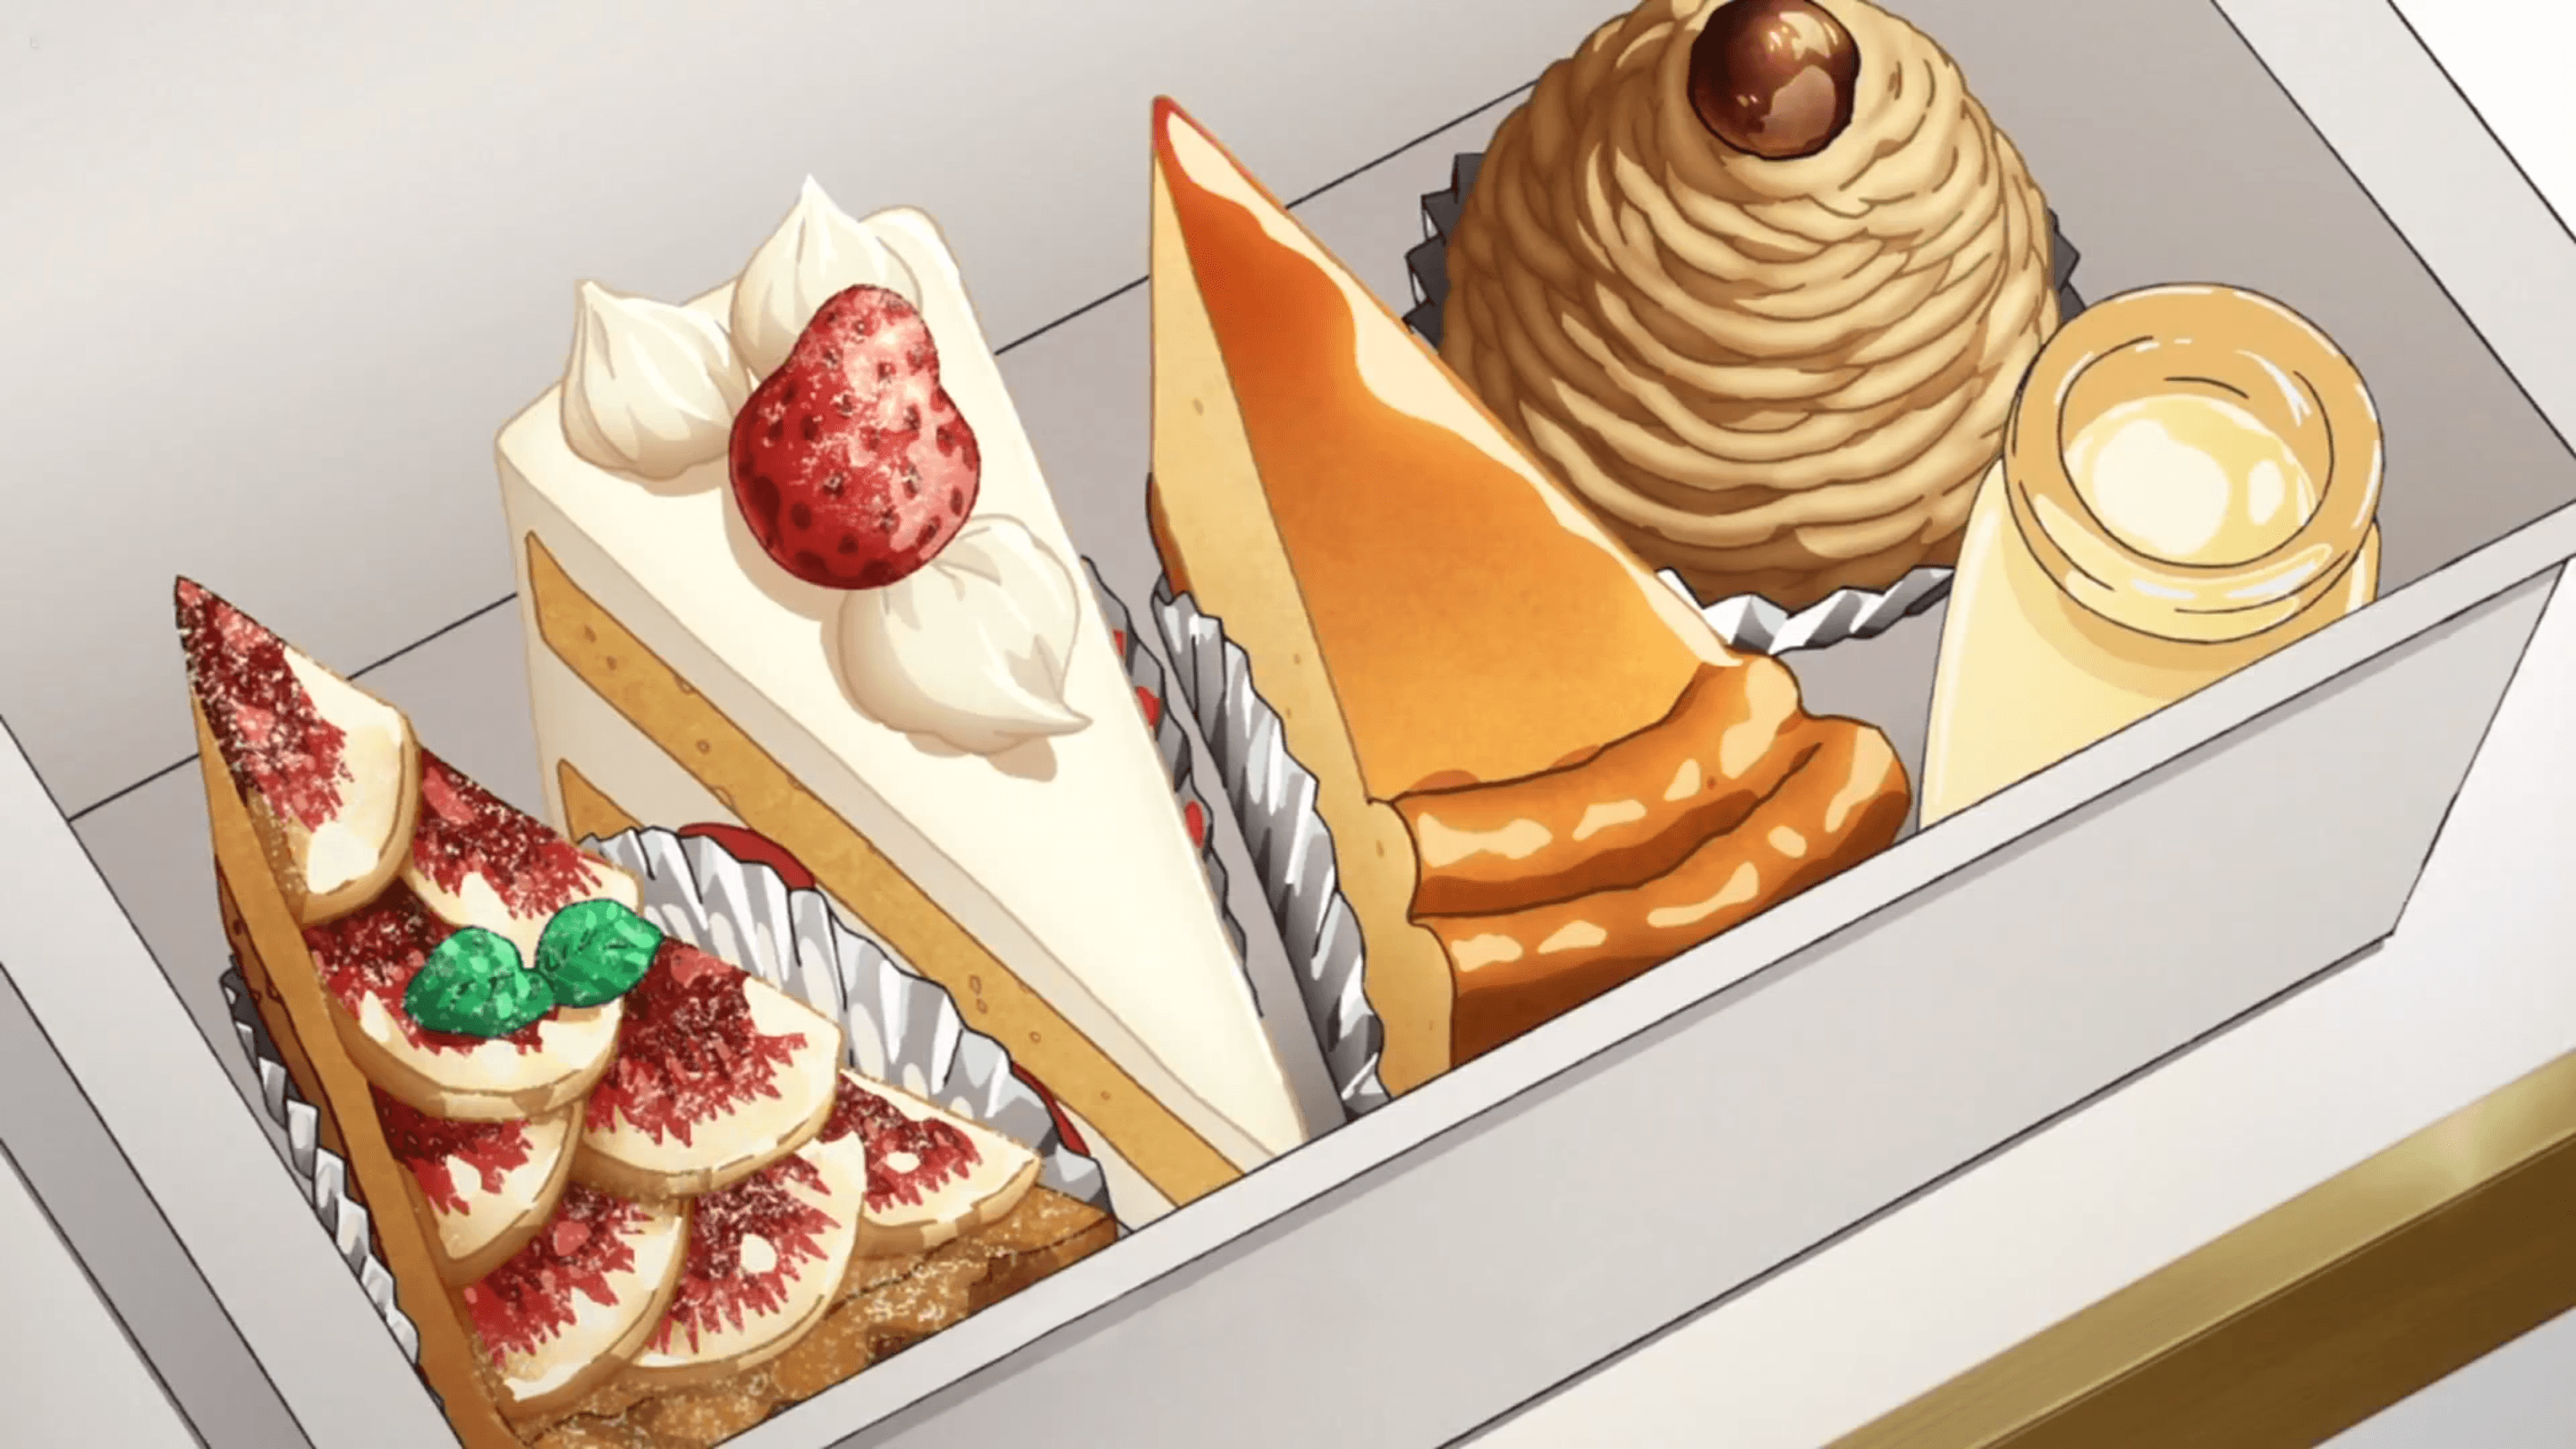 Bakery backgrounds on Behance